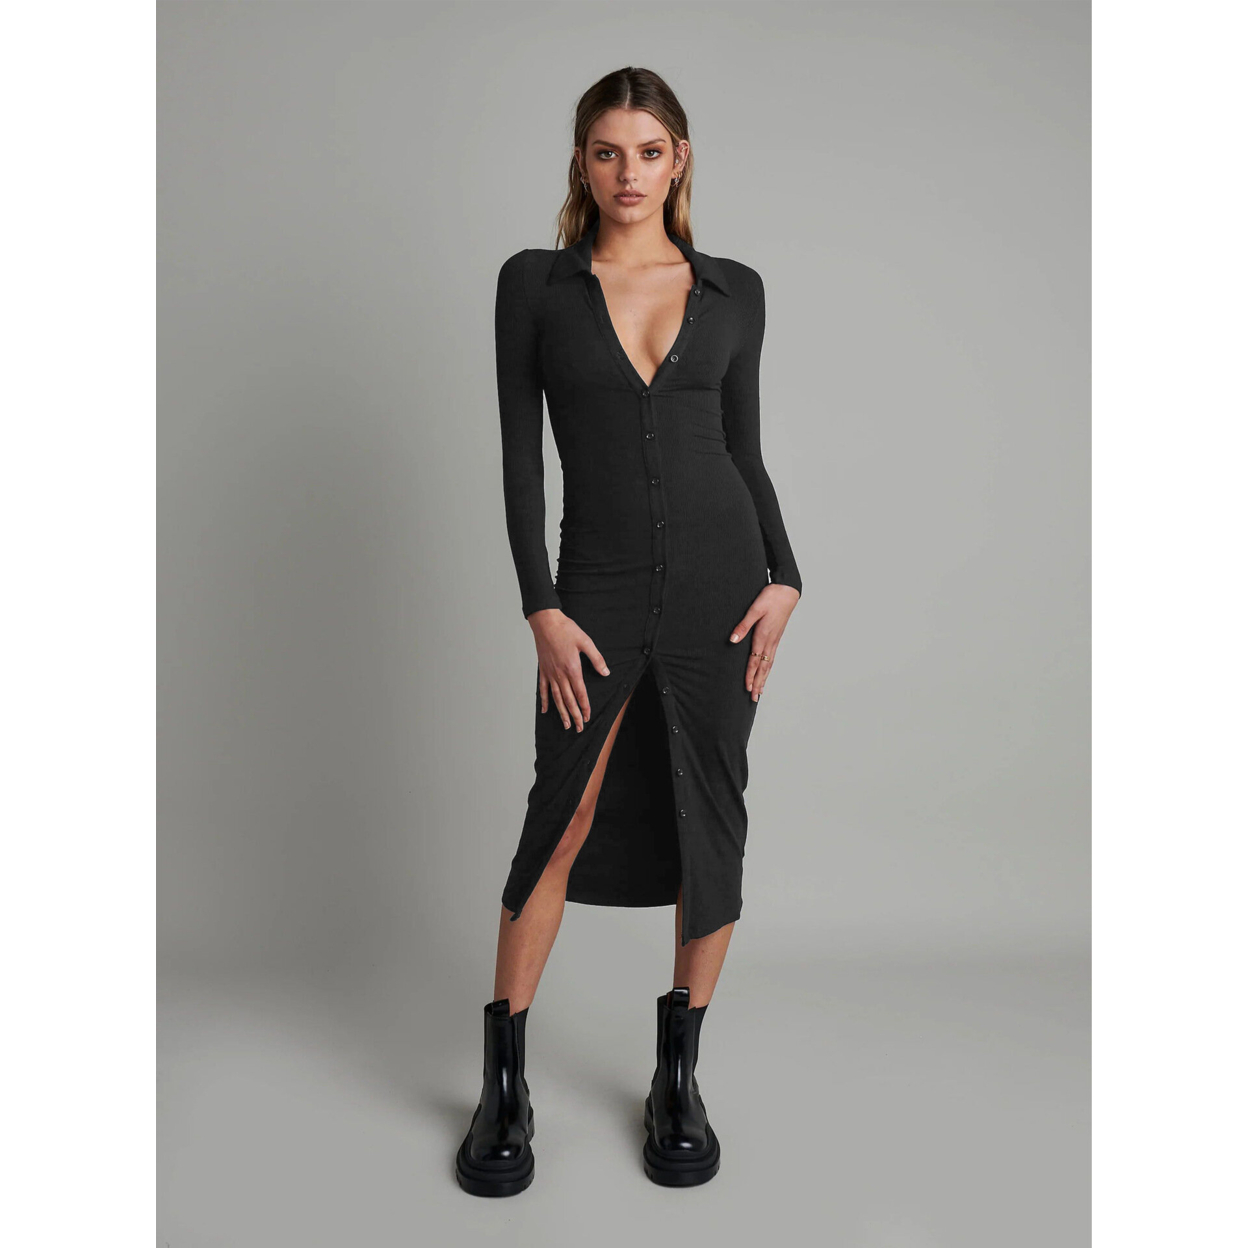 Sexy Fashion Cardigan Long Sleeve Shirt Skirt Women's Long Dress - Black, M